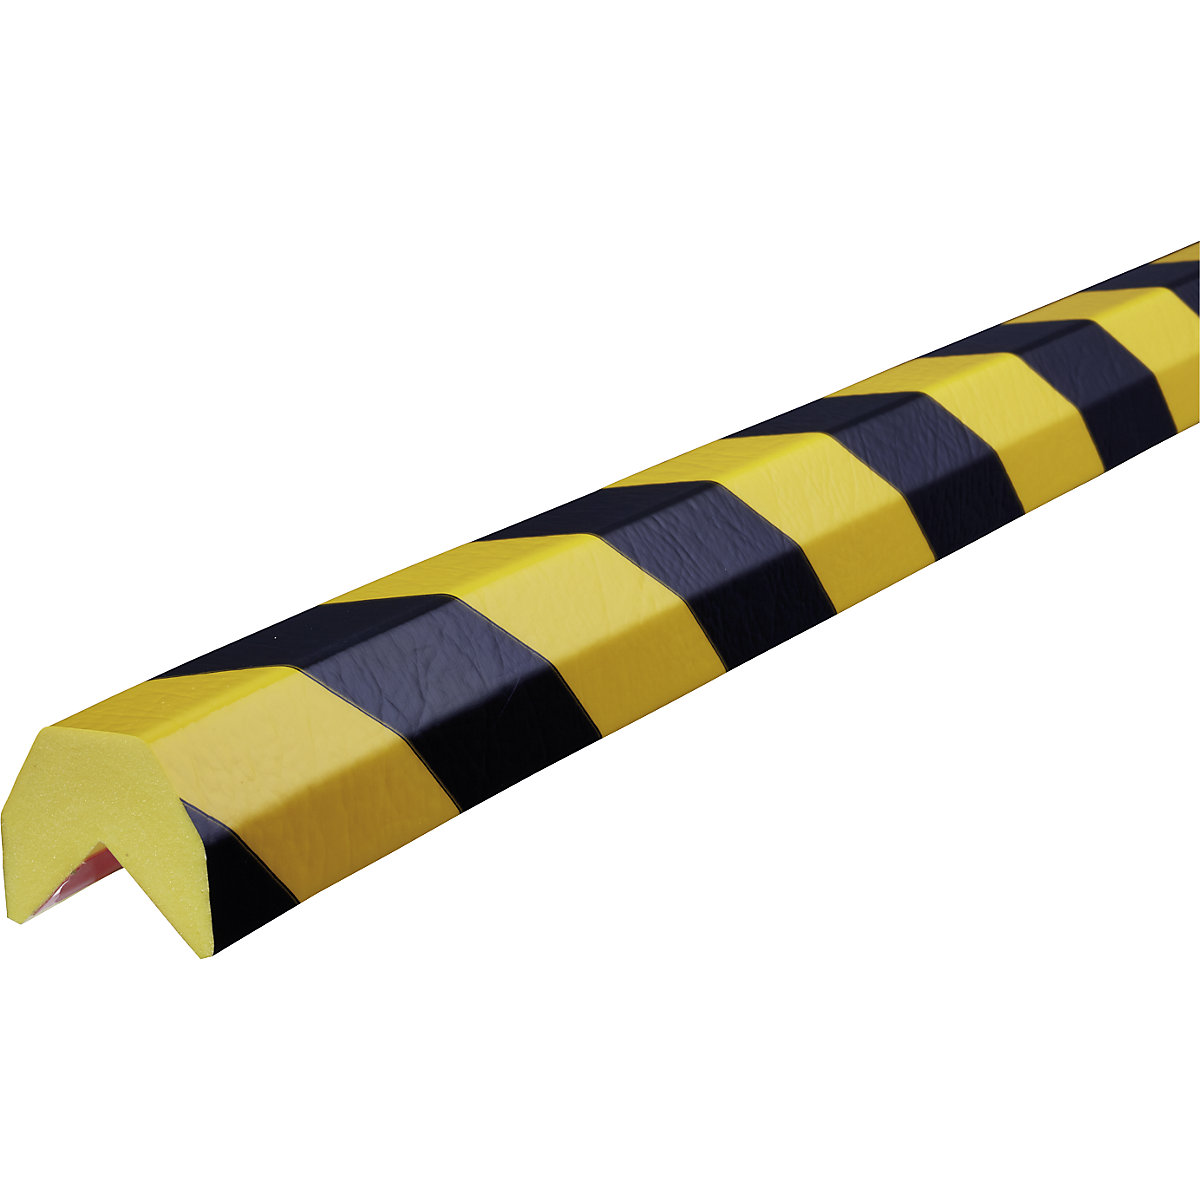 Knuffi® corner protection – SHG, type AA, 1 x 5 m roll, black / yellow-13